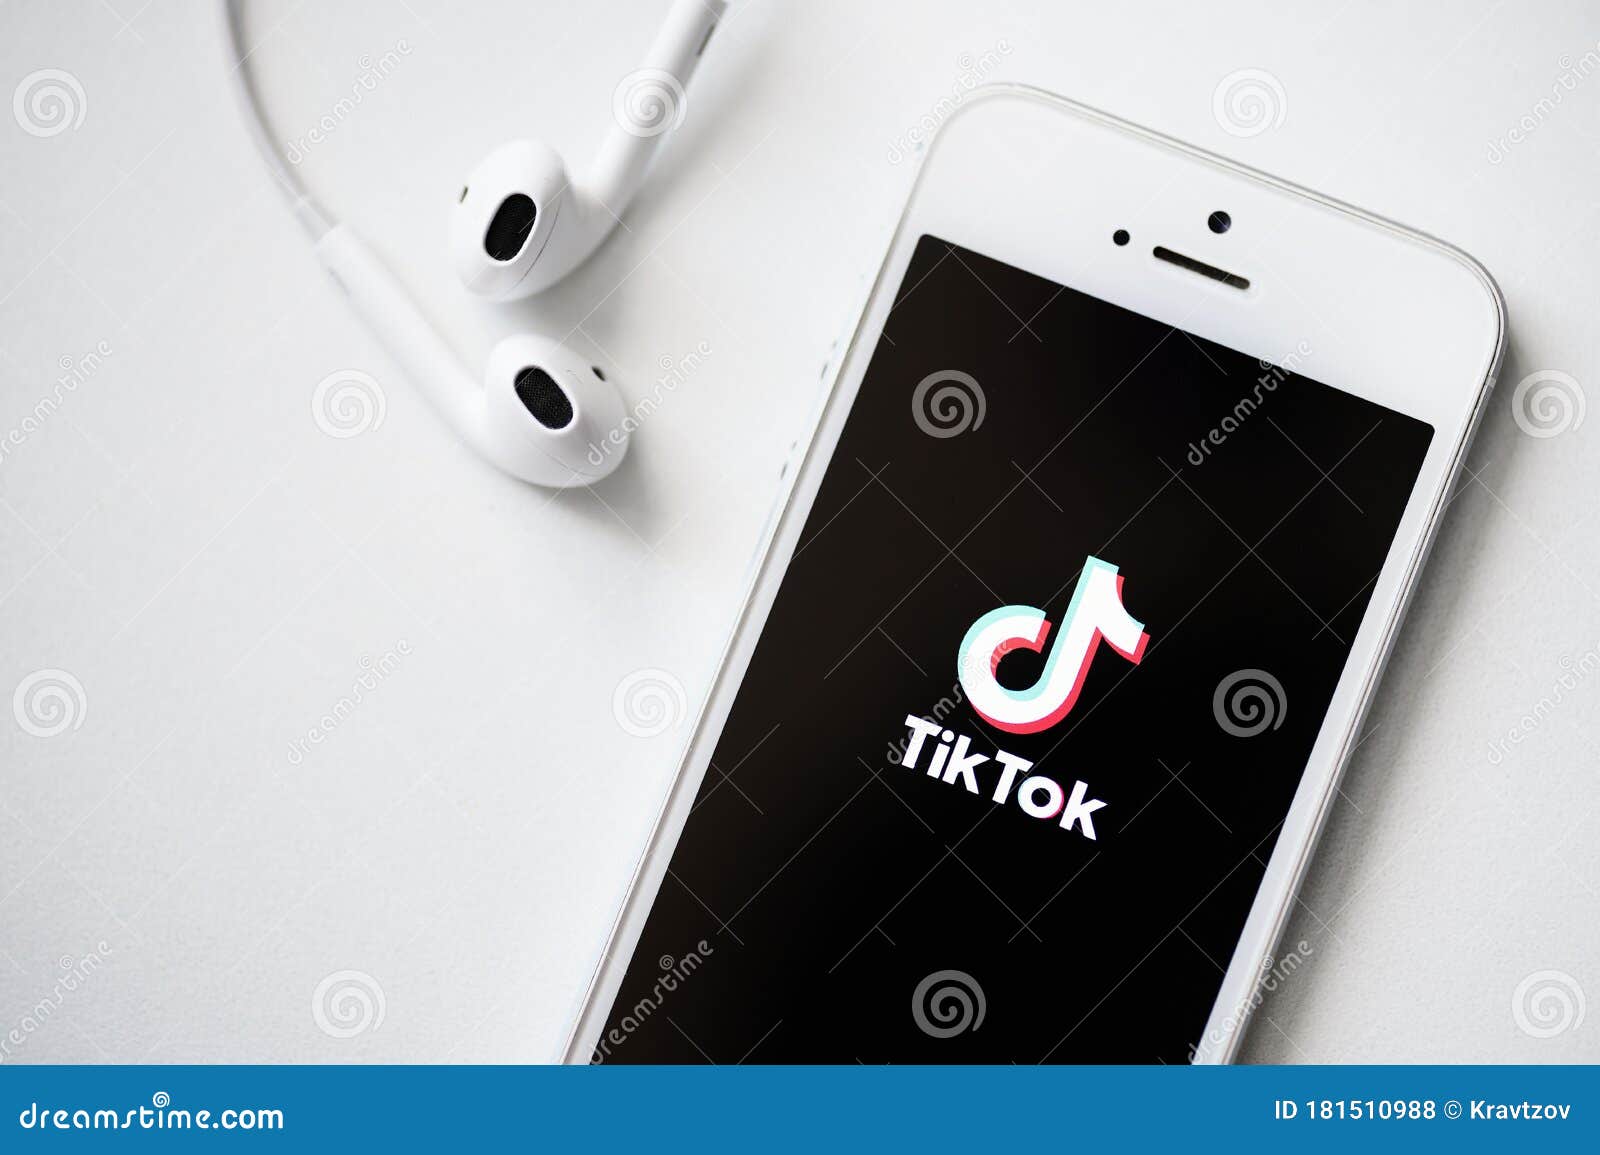 37 Best Pictures Tiktok App Icon Black And White - Tik Tok New Features in 2020 | Logo sticker, Snapchat logo ...